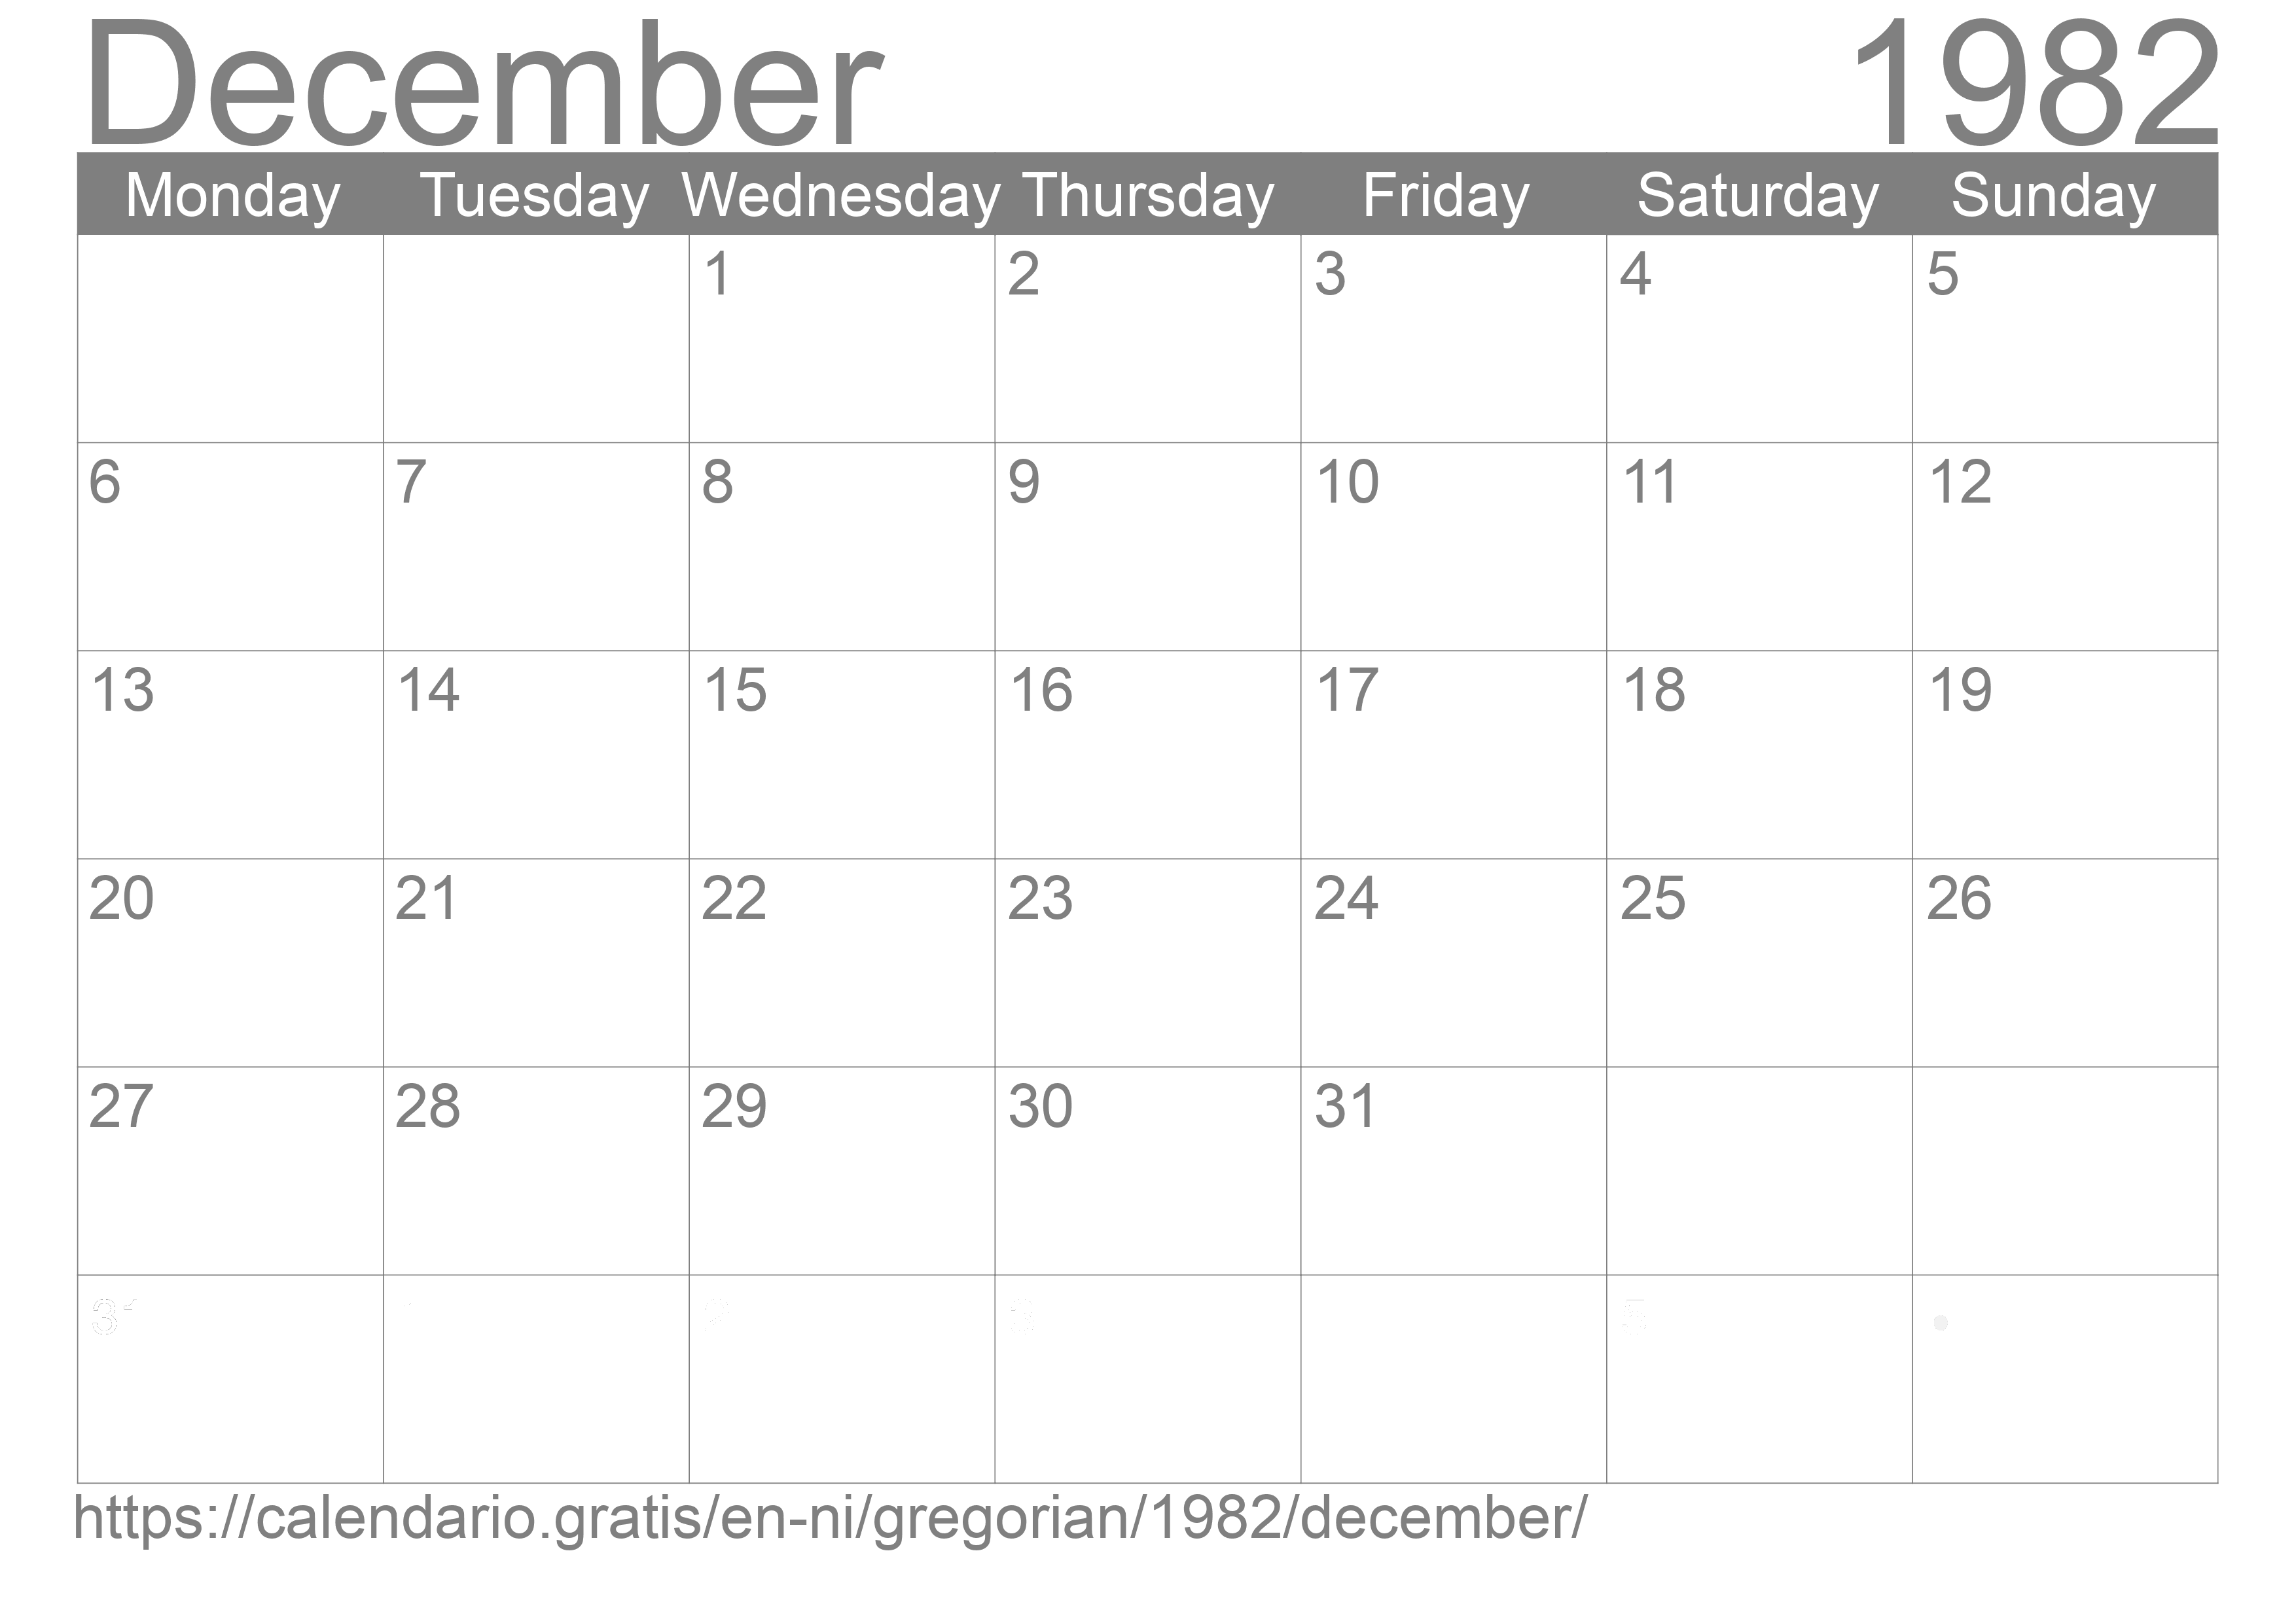 Calendar December 1982 to print